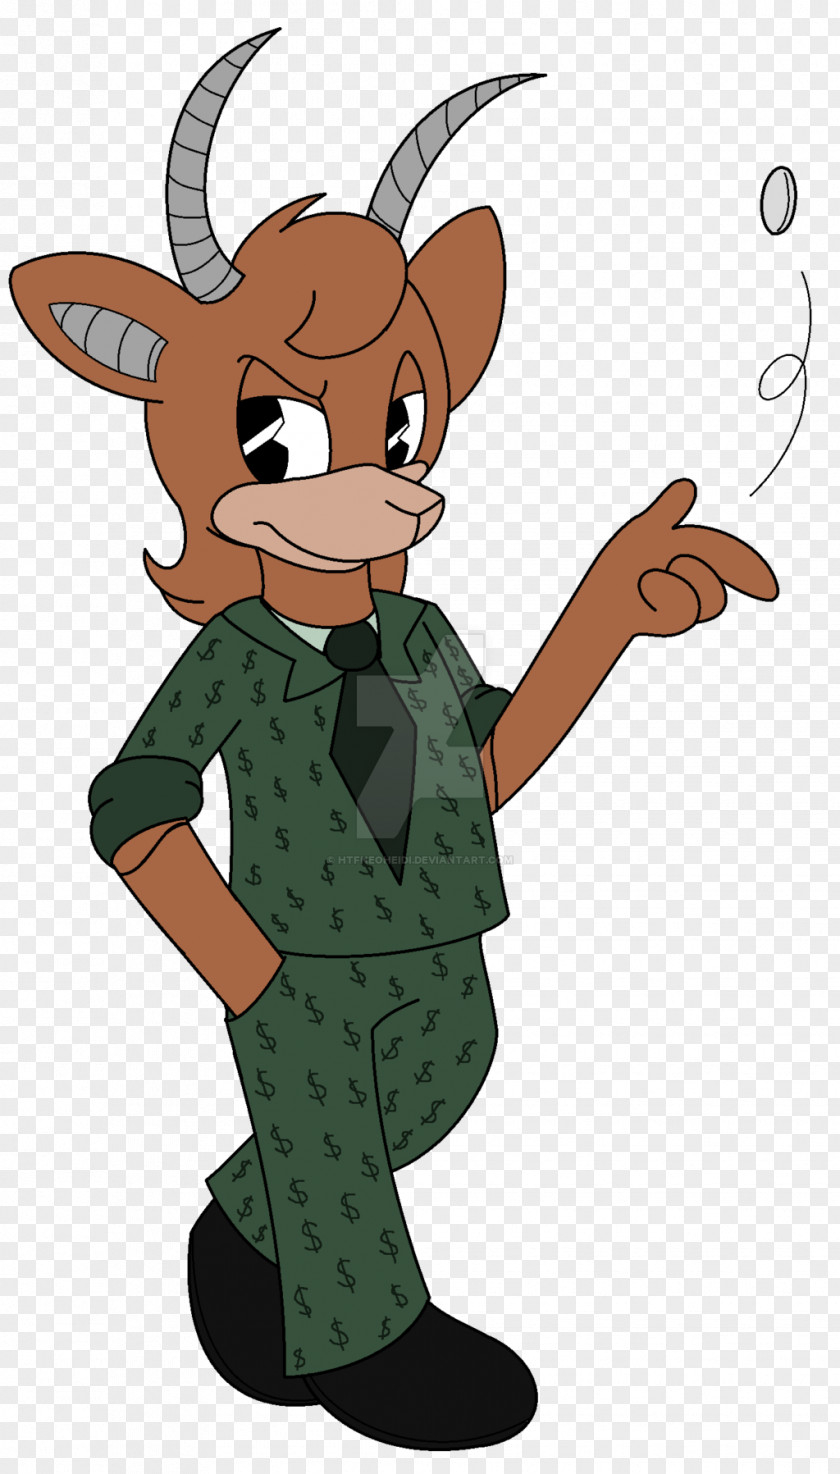 Bucks Mammal Mascot Character Clip Art PNG